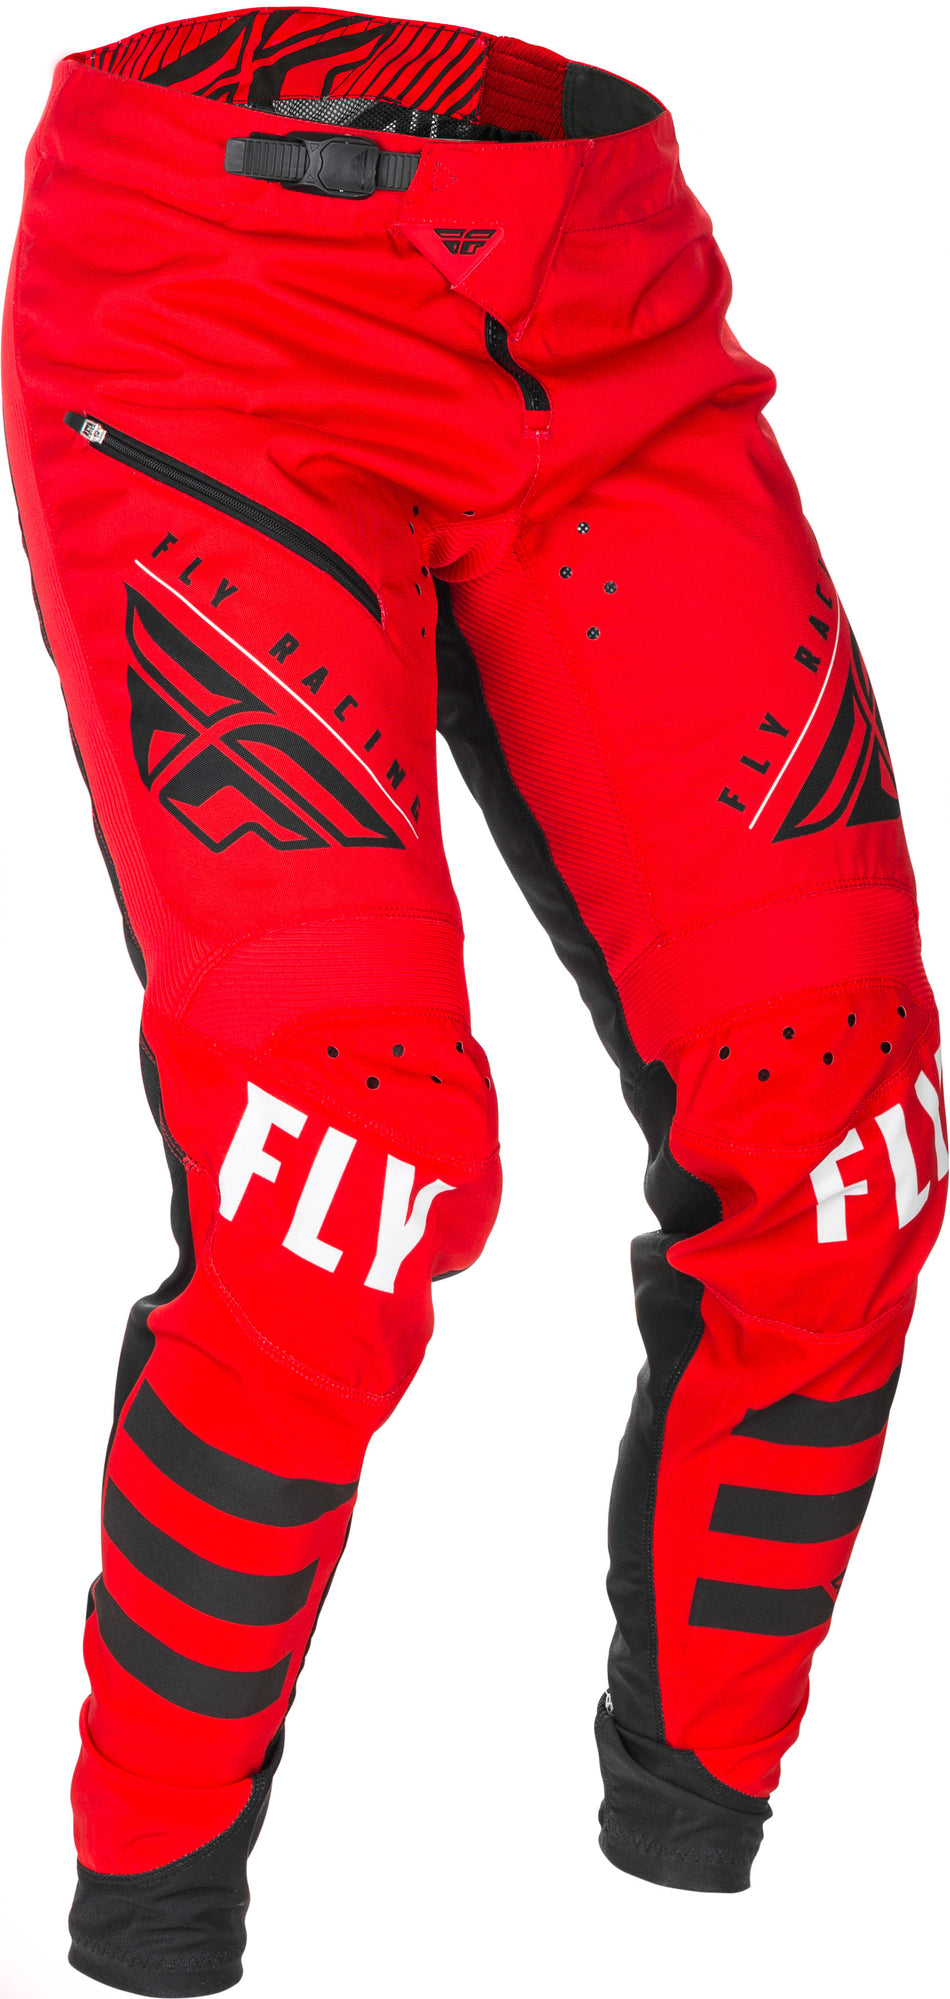 FLY RACING Kinetic Bicycle Pants Red/Black Sz 34 373-04234